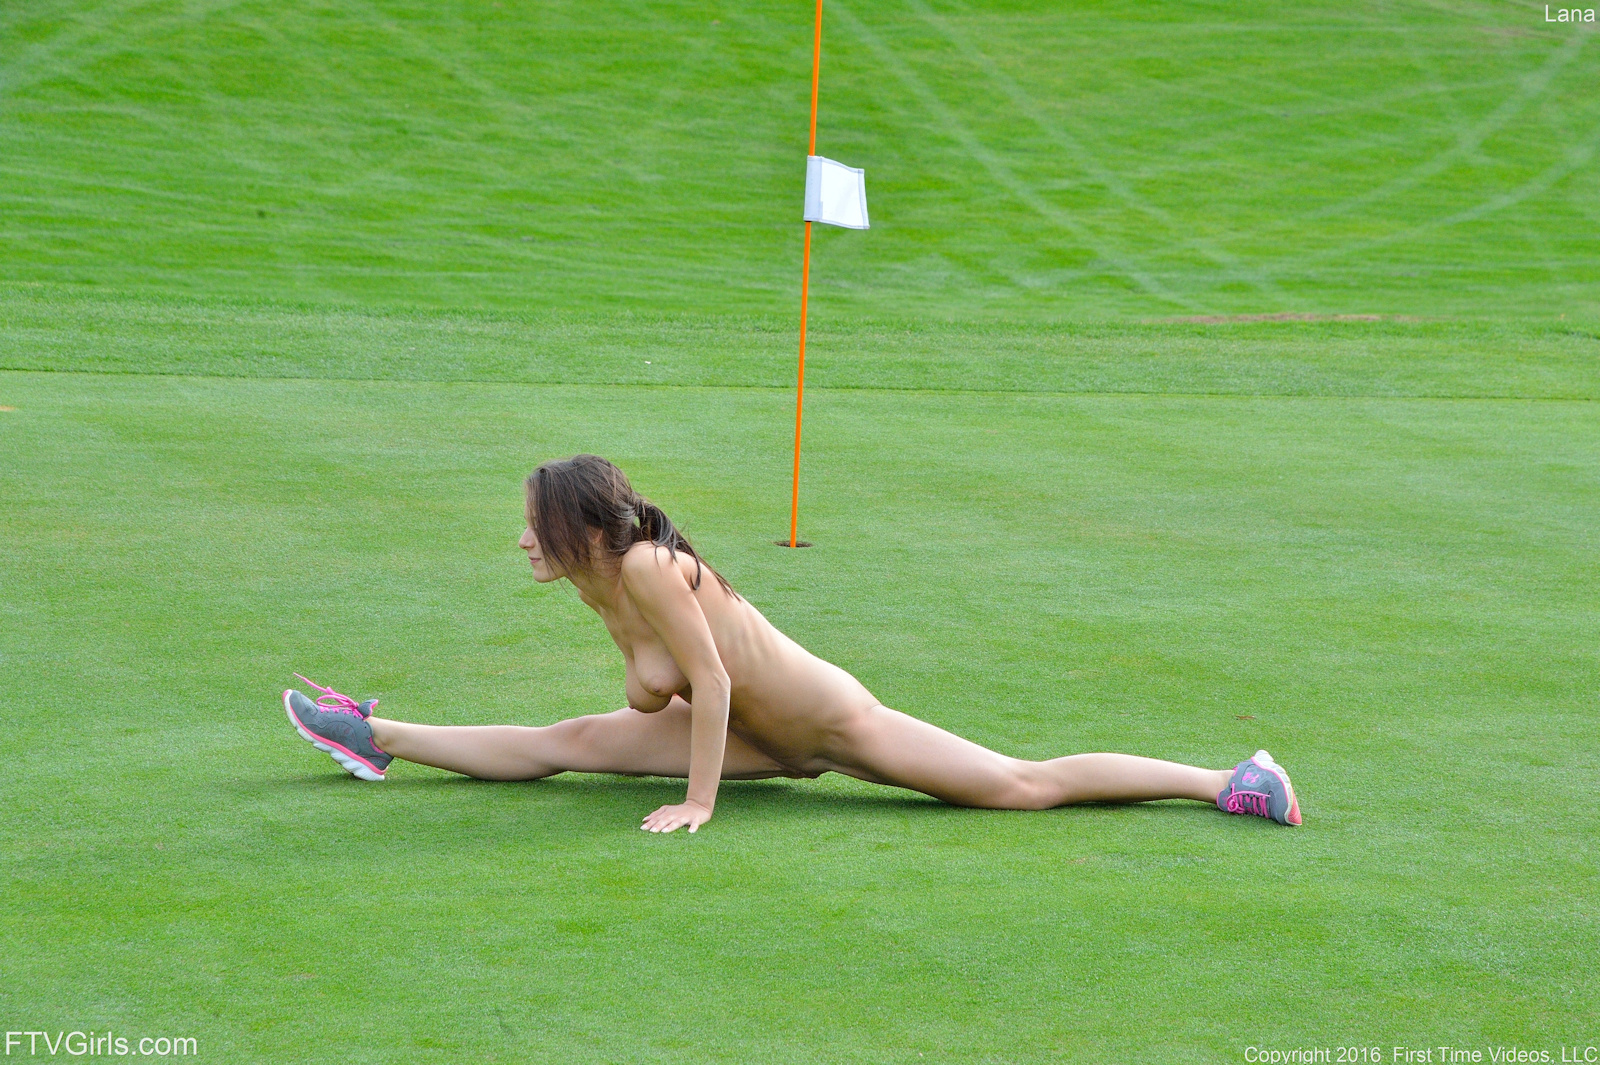 lana-golf-course-flash-in-public-ftvgirls-32